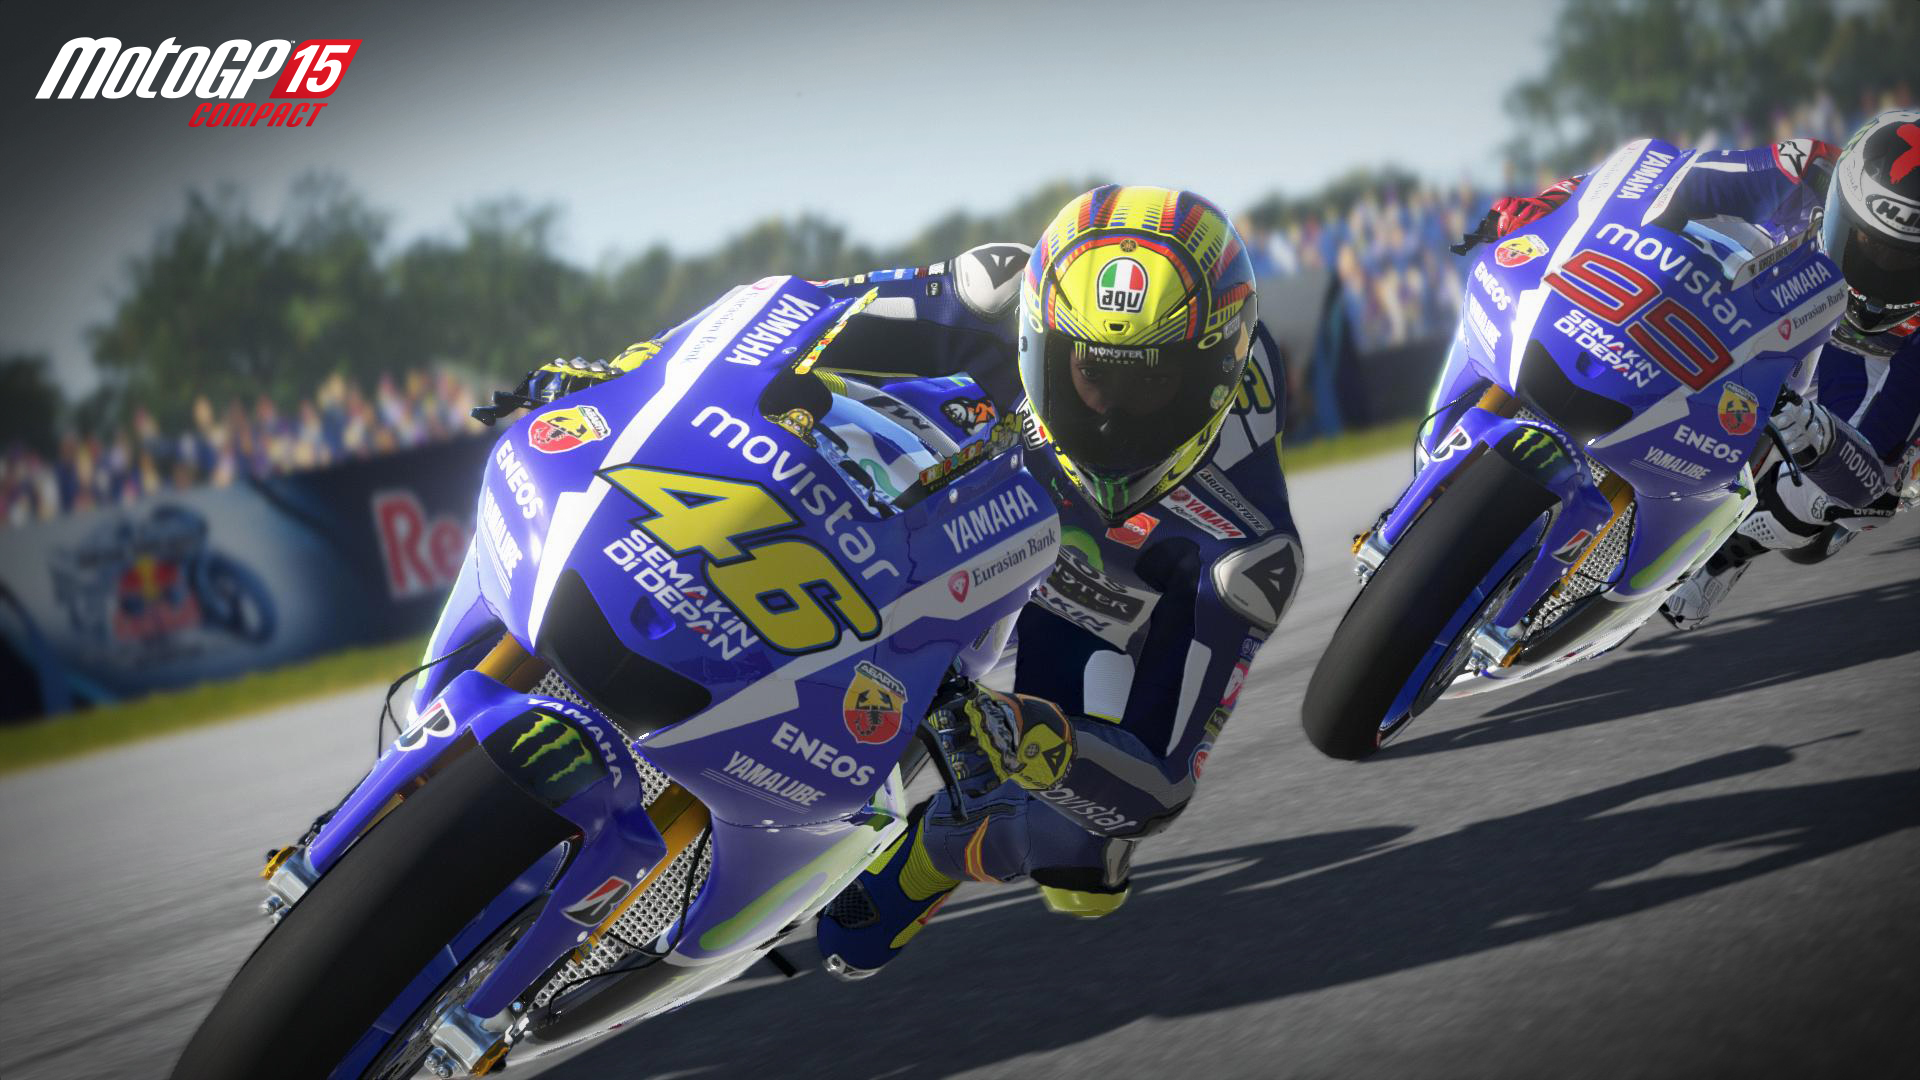 MotoGP15 Compact screenshot